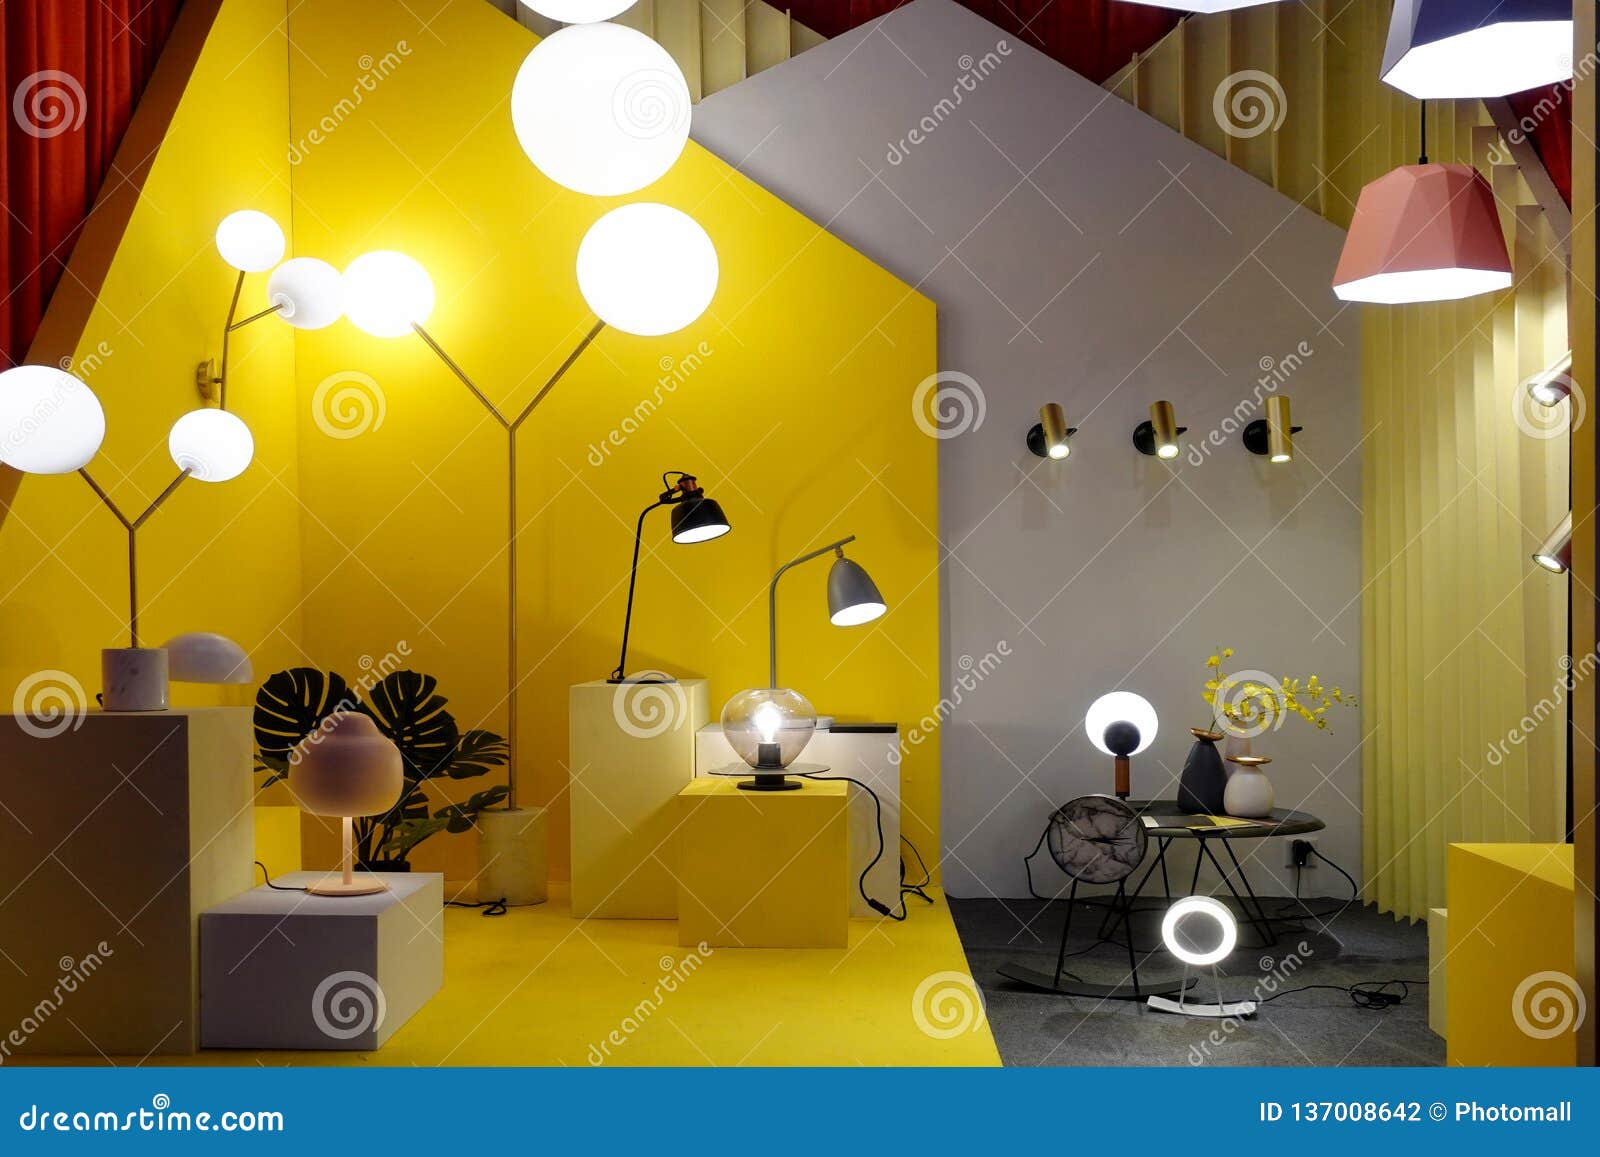 modern lamp in lighting showroom